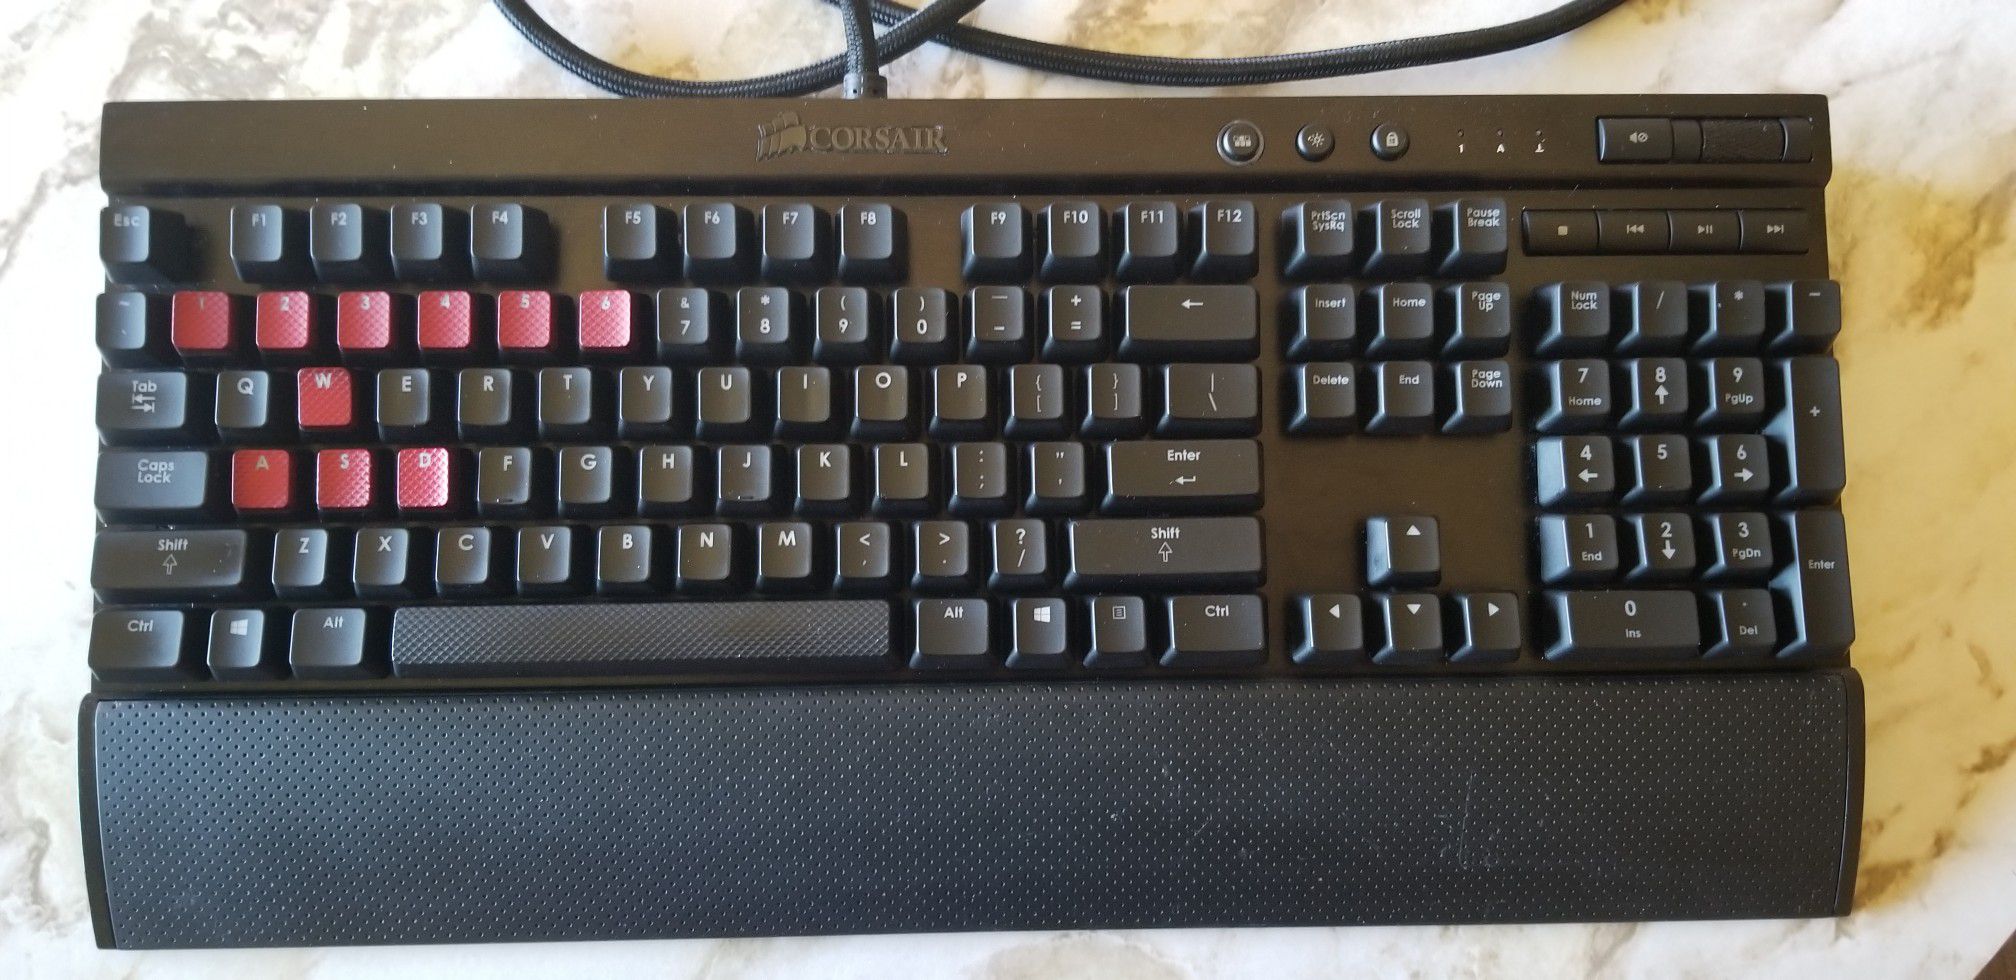 Corsair Vengence k70 Keyboard